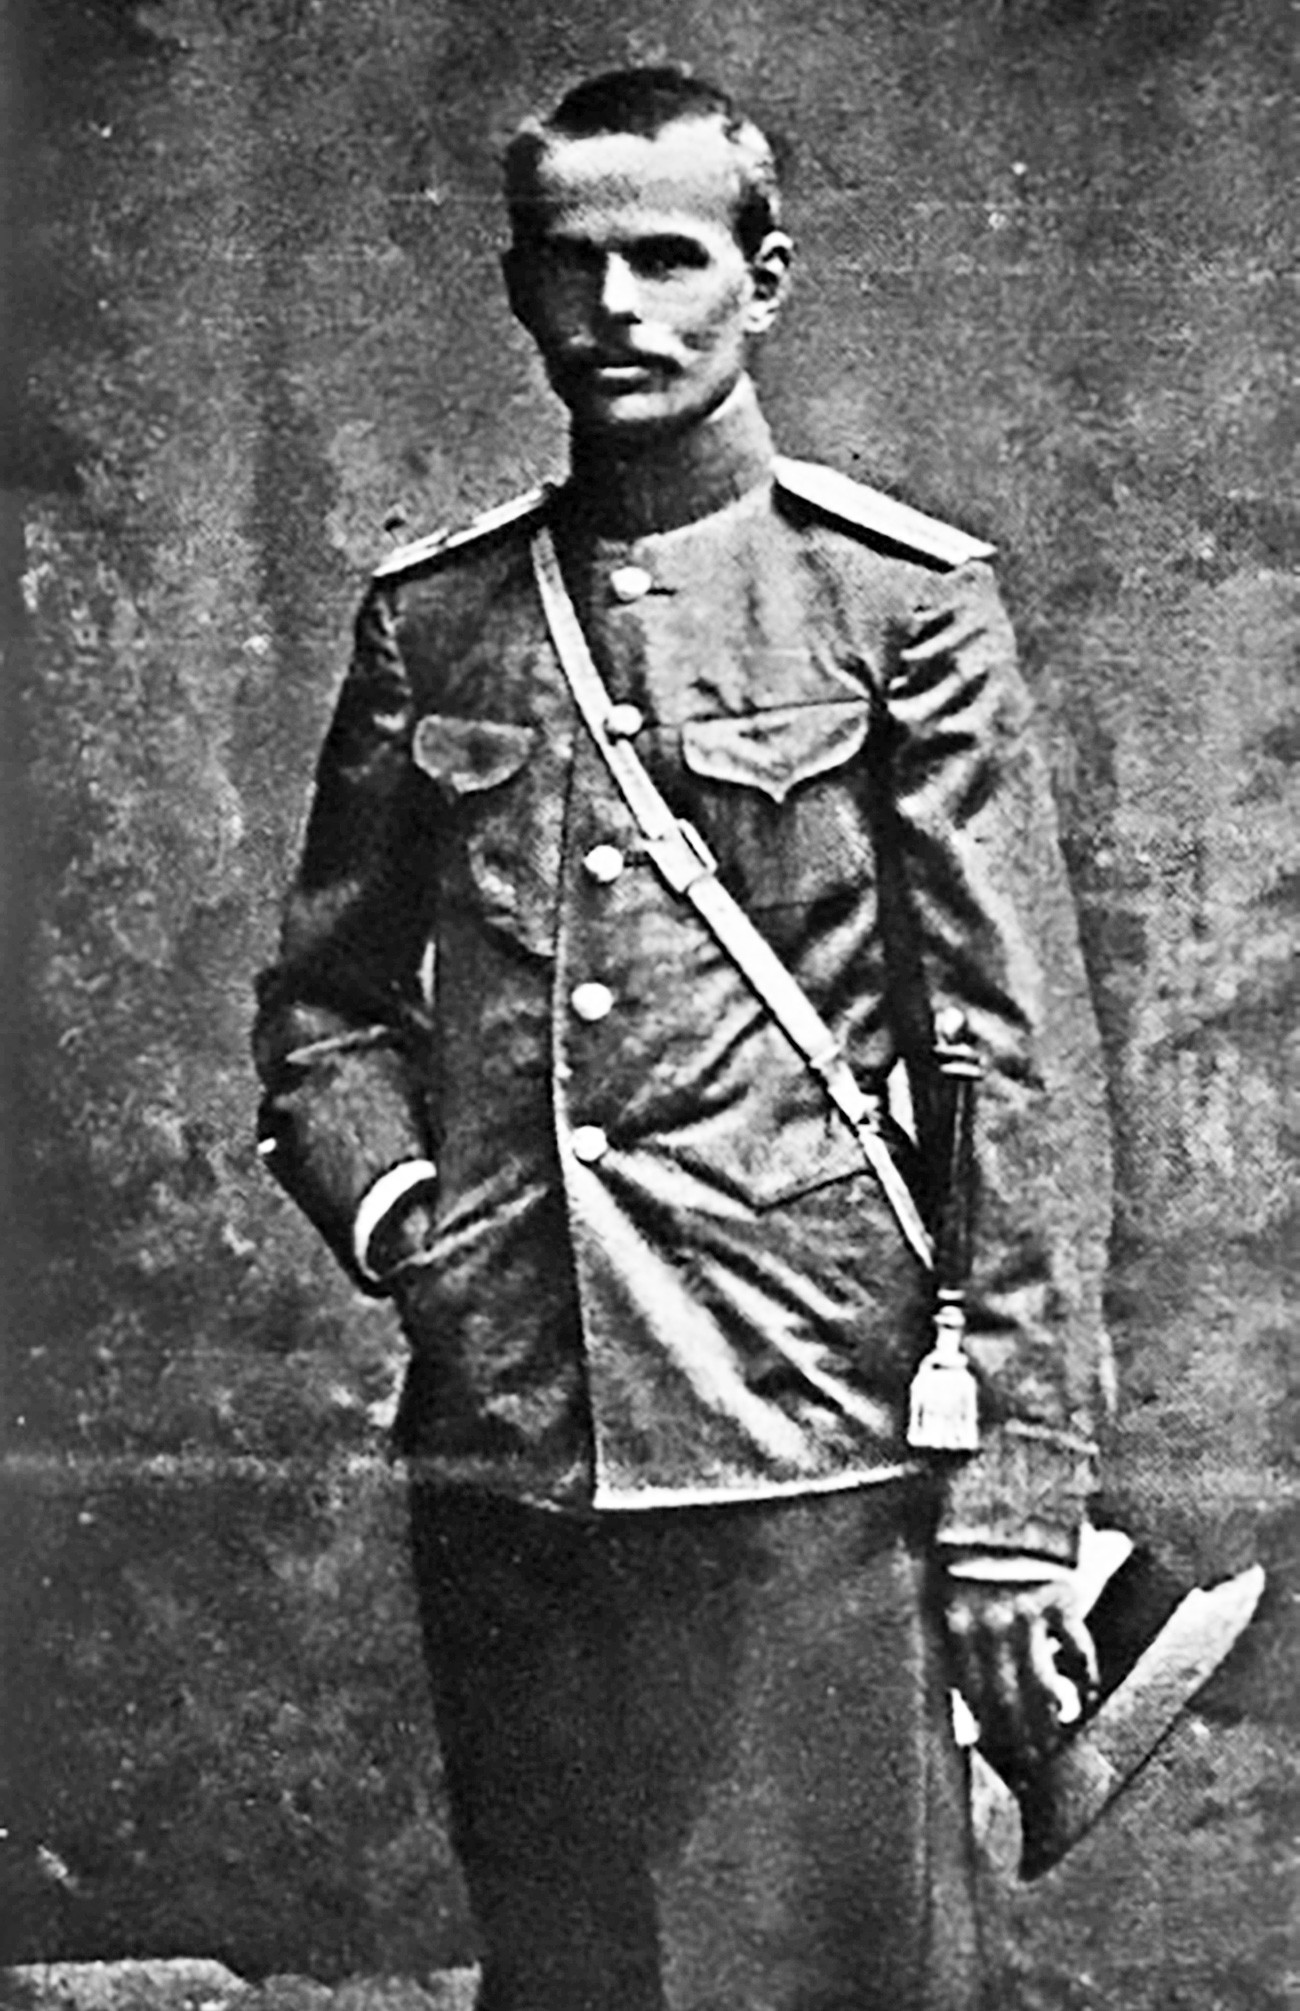 Roman von Ungern selama tugas militer pada Perang Dunia I.